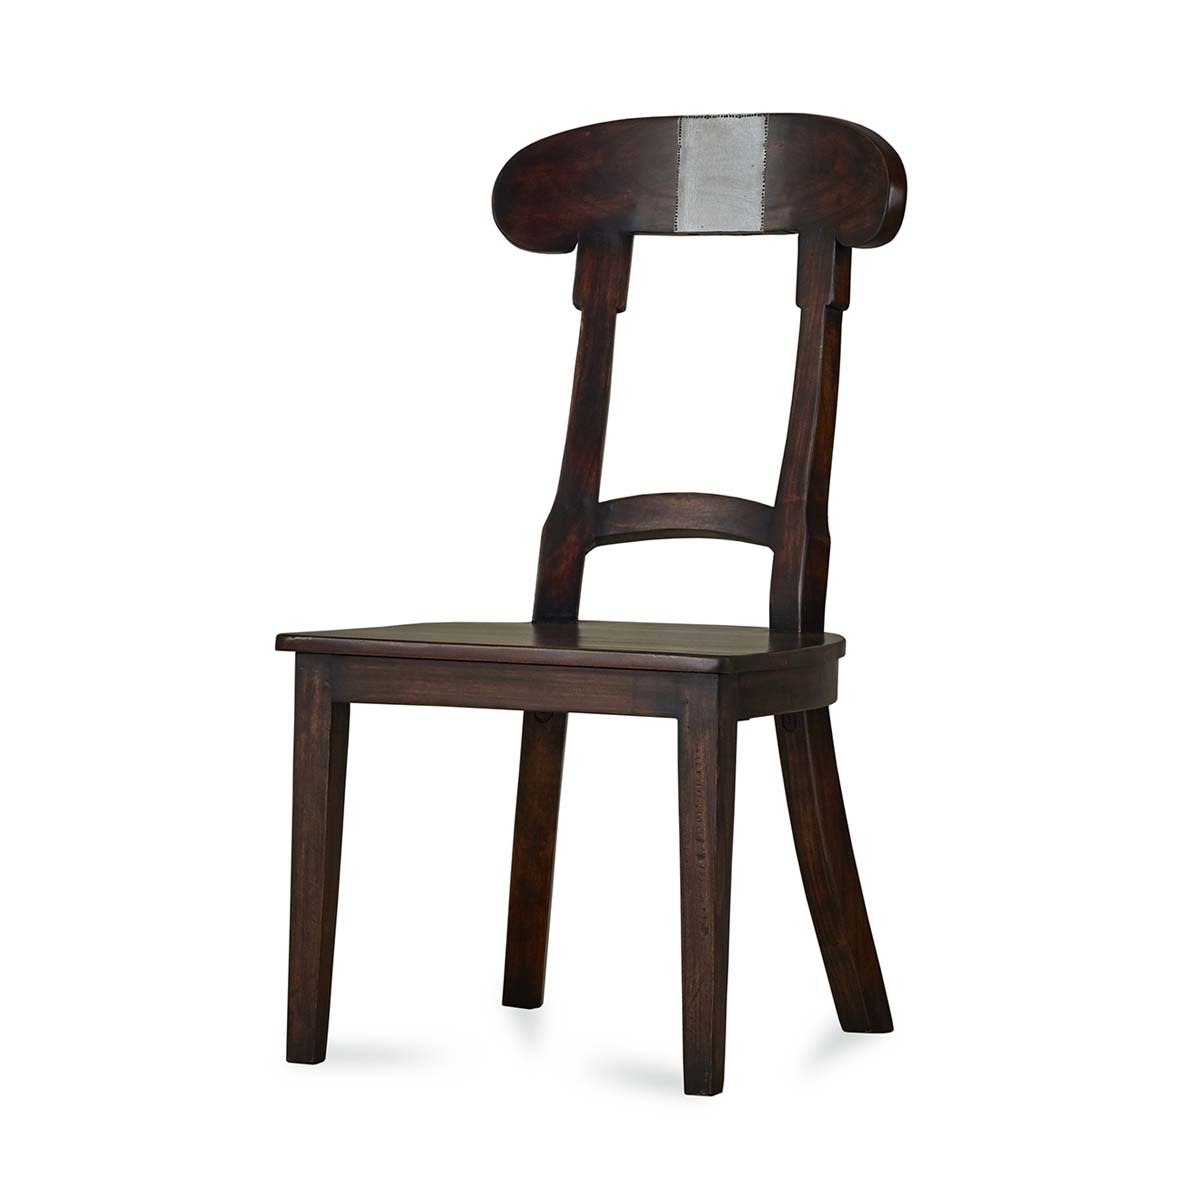 Swedish Farmhouse Chairs w/ Tin & Wooden Seat